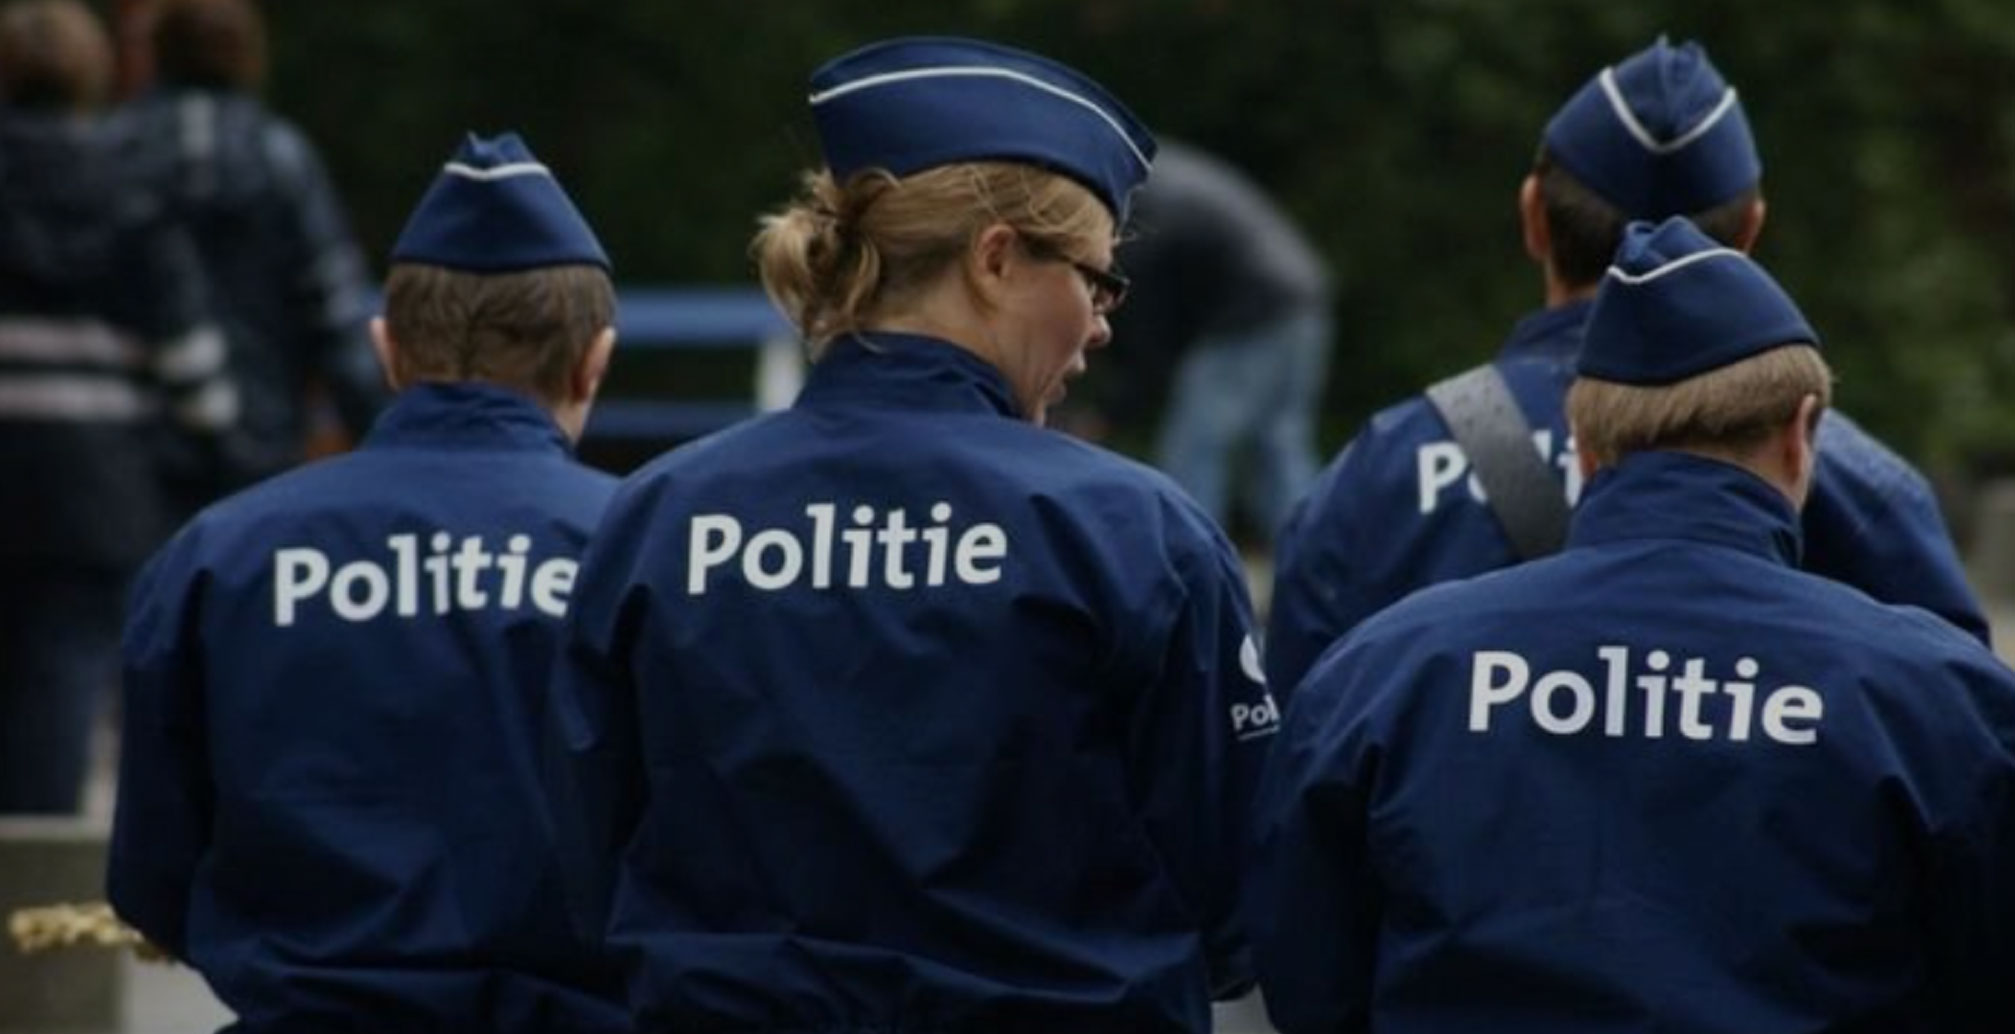 Politie Antwerpen Yolk